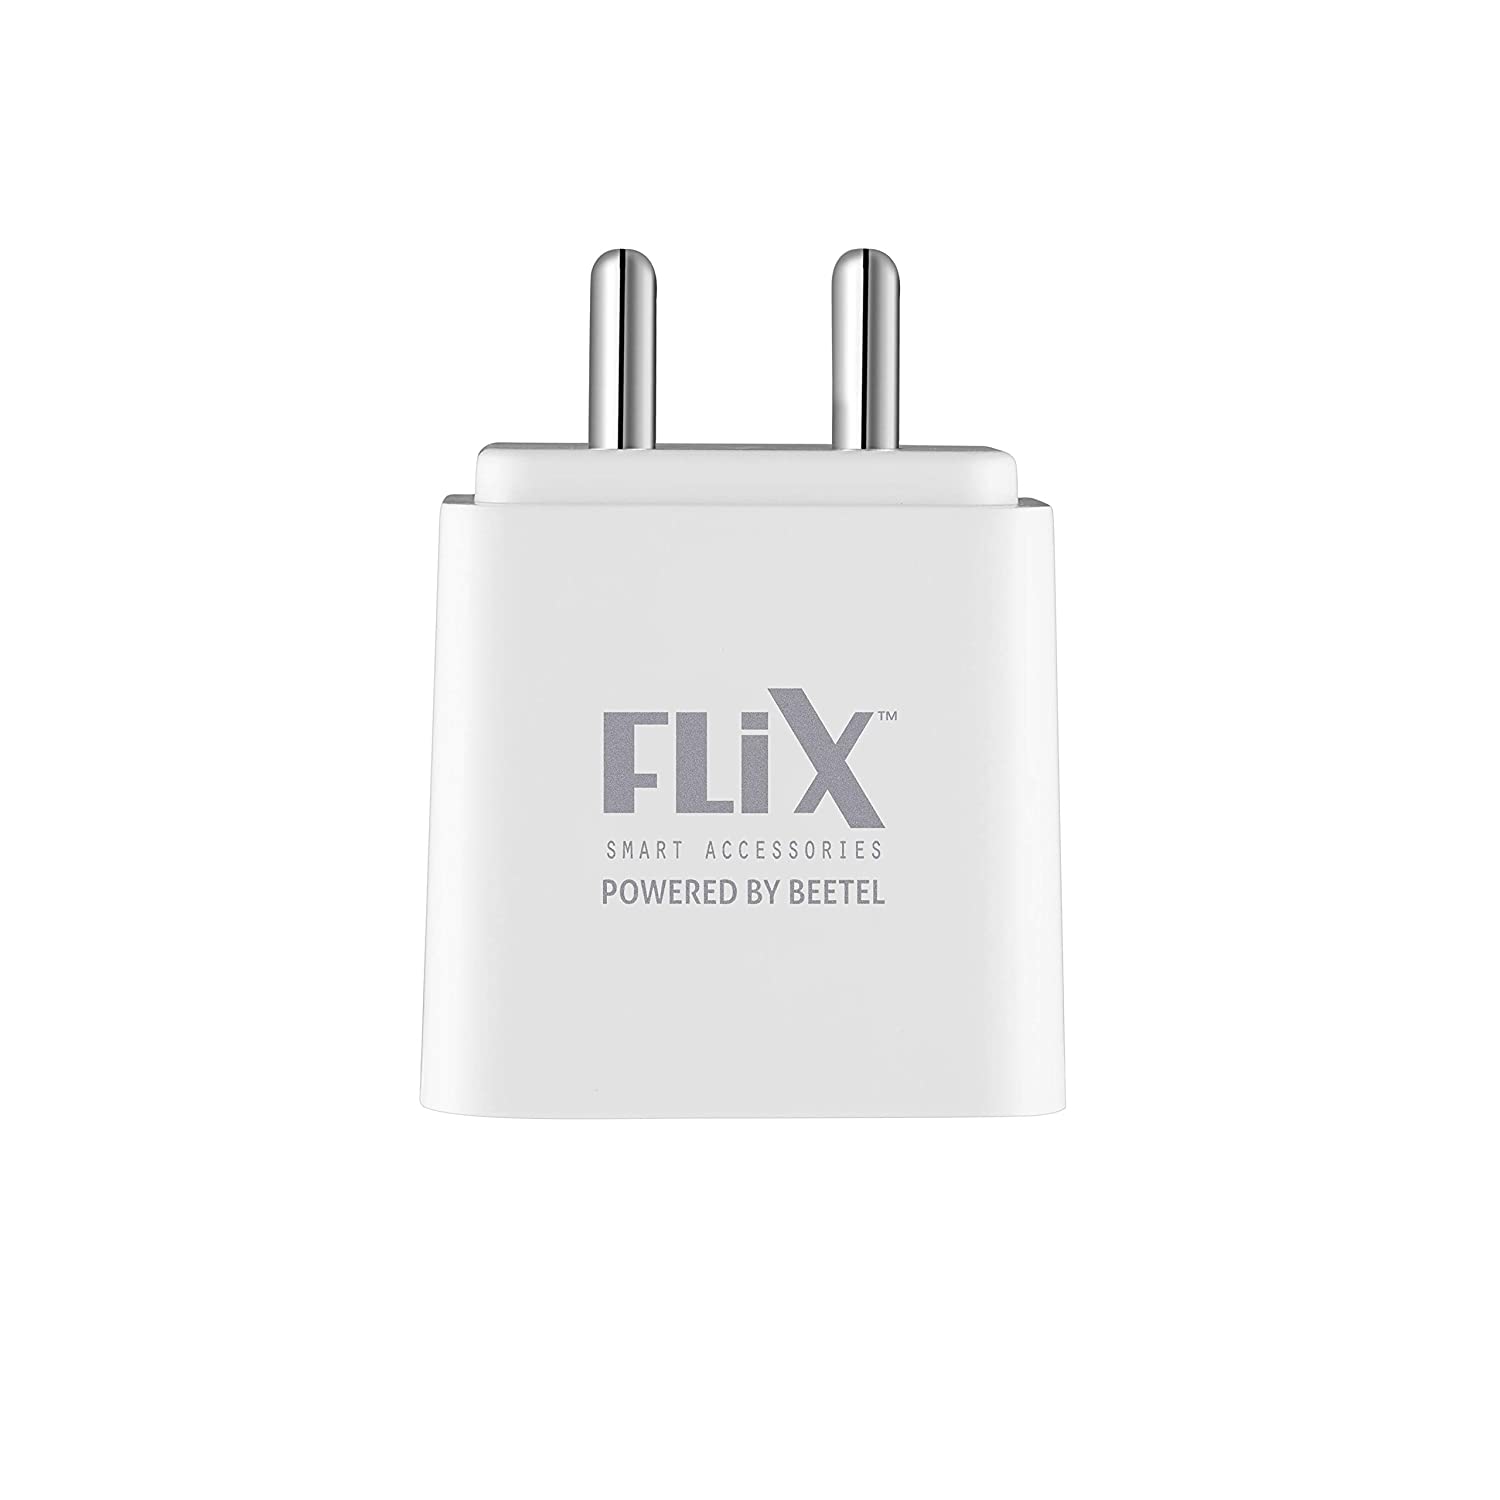 FLiX (Beetel) Rise 2.4 12W Dual USB Smart Fast Charging Power Adaptor